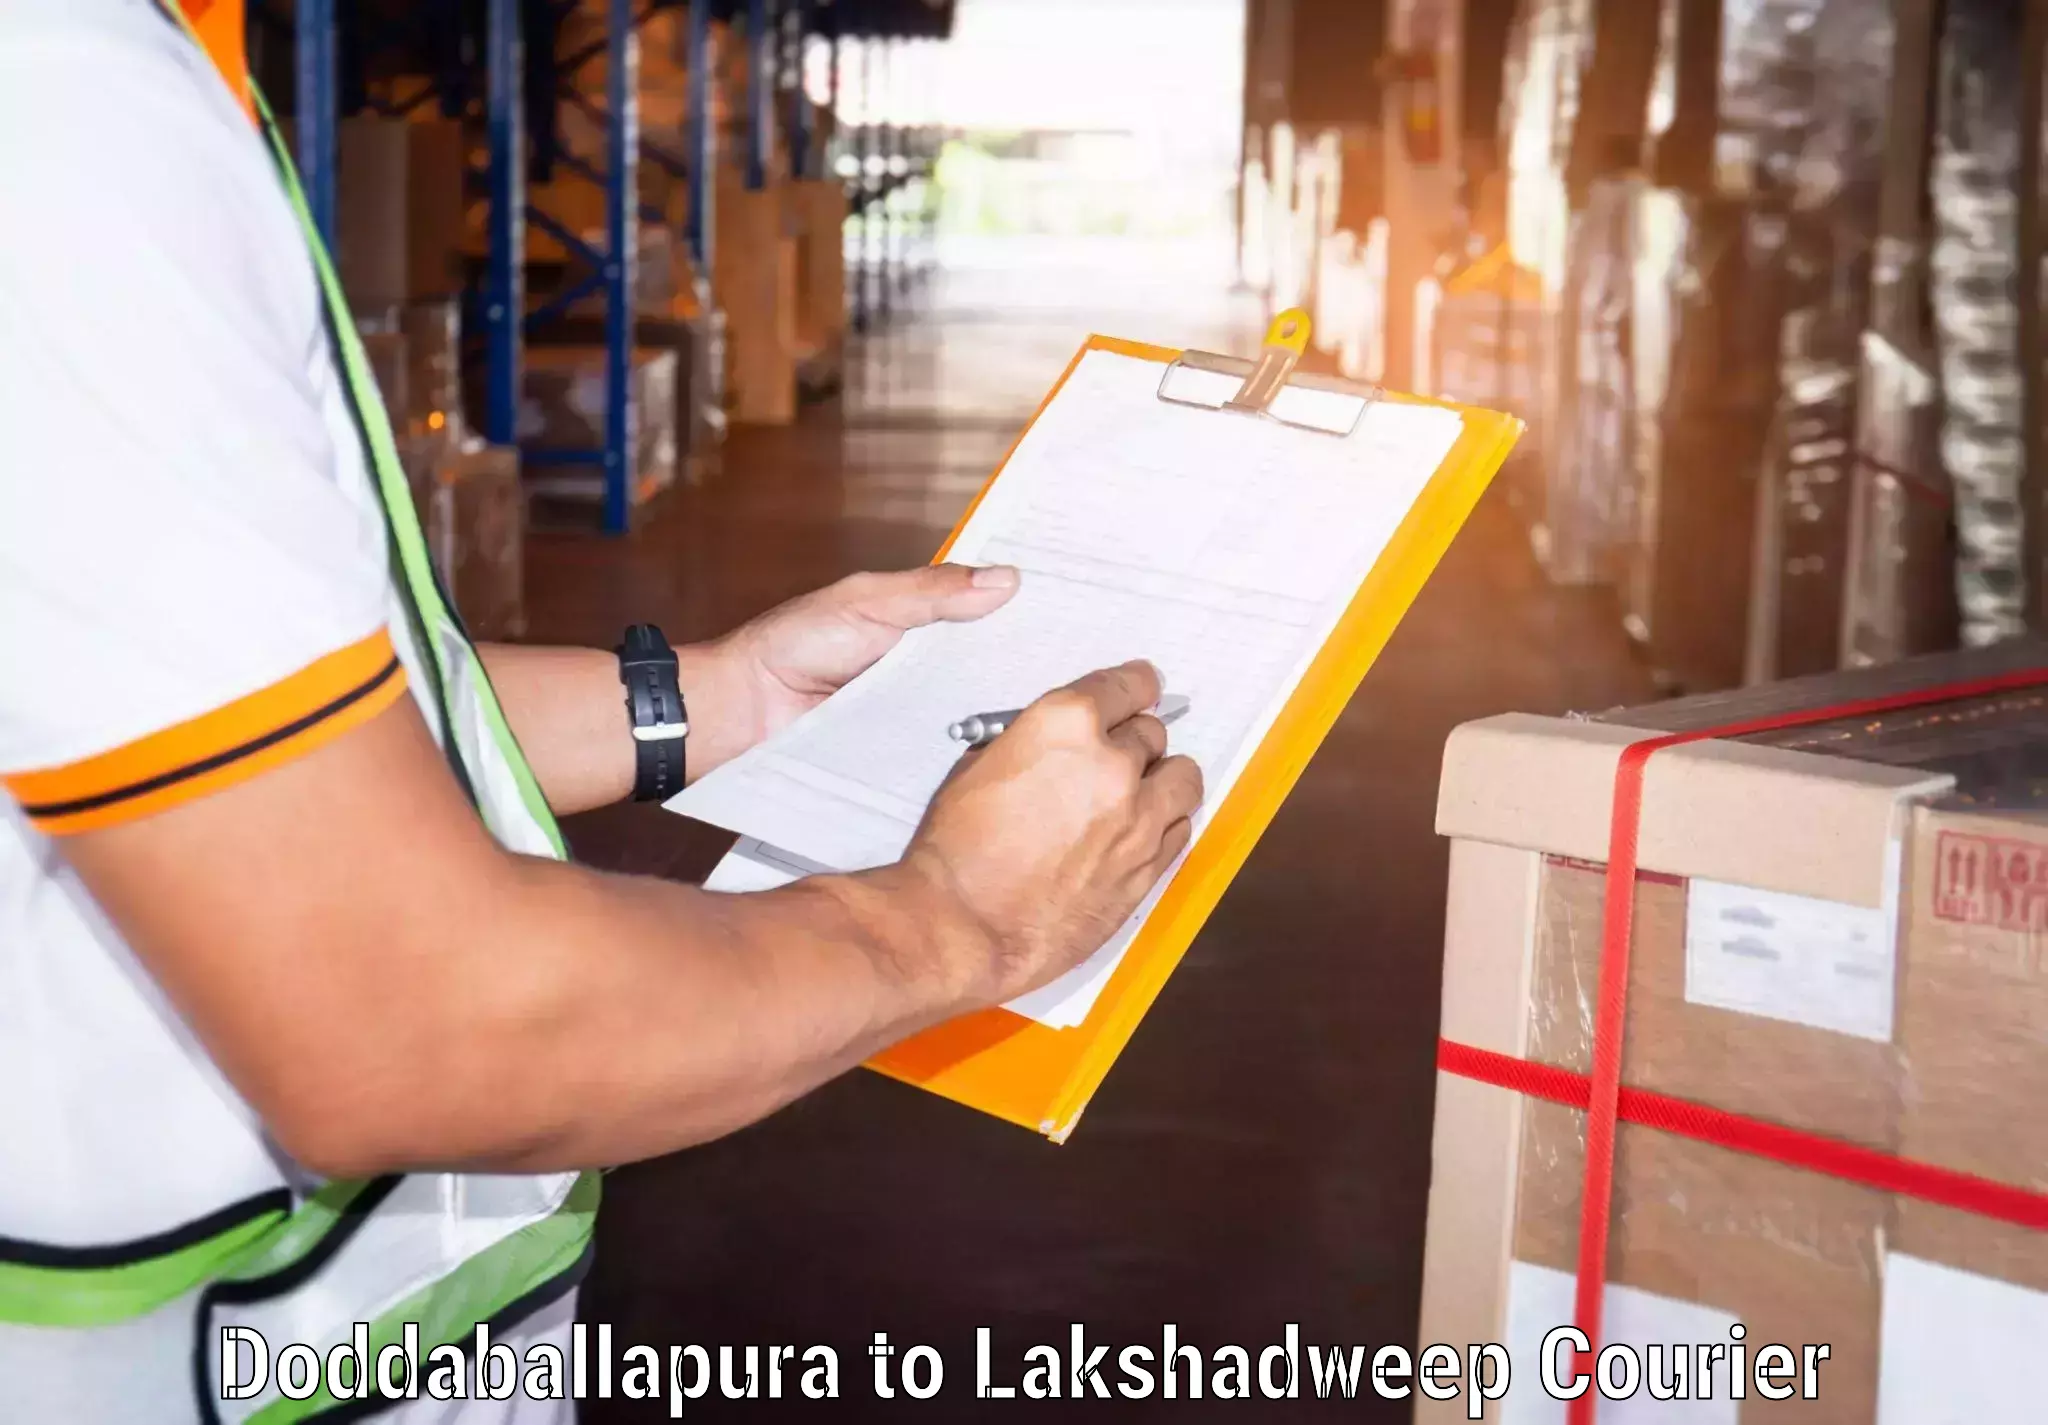 Advanced tracking systems Doddaballapura to Lakshadweep